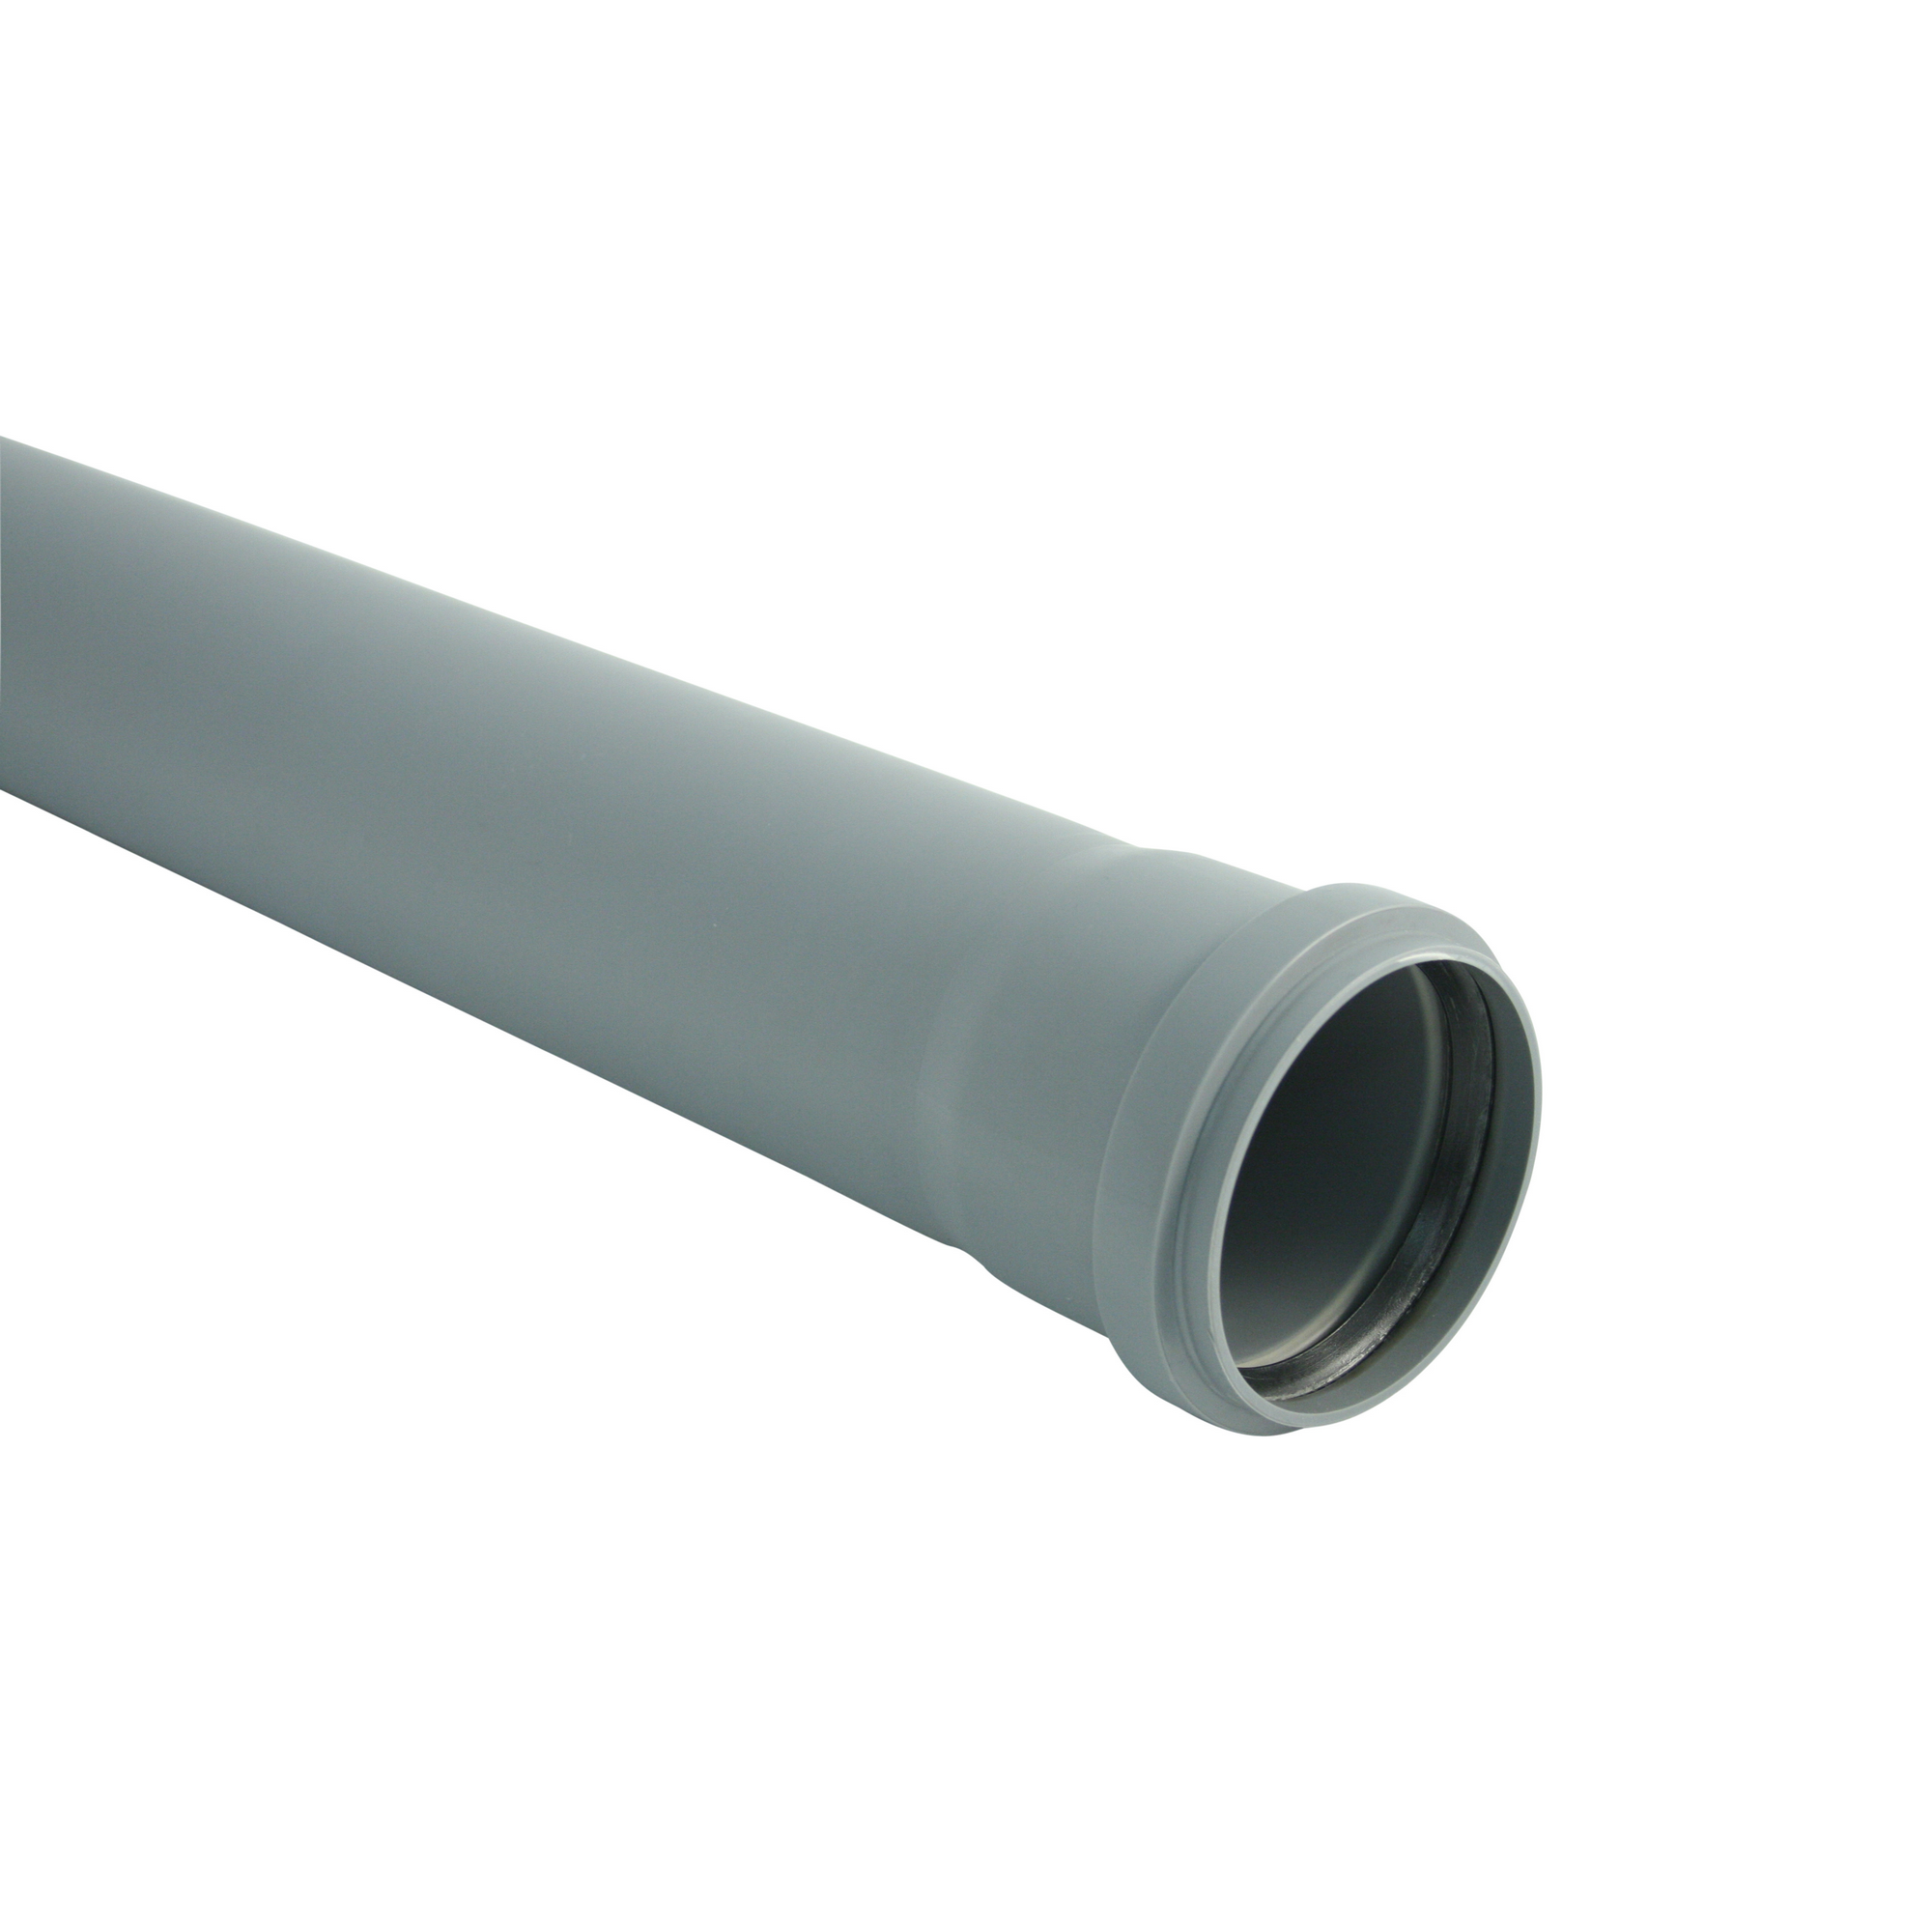 HTEM-Rohr mit Steckmuffe grau DN 90, 2075 mm + product picture